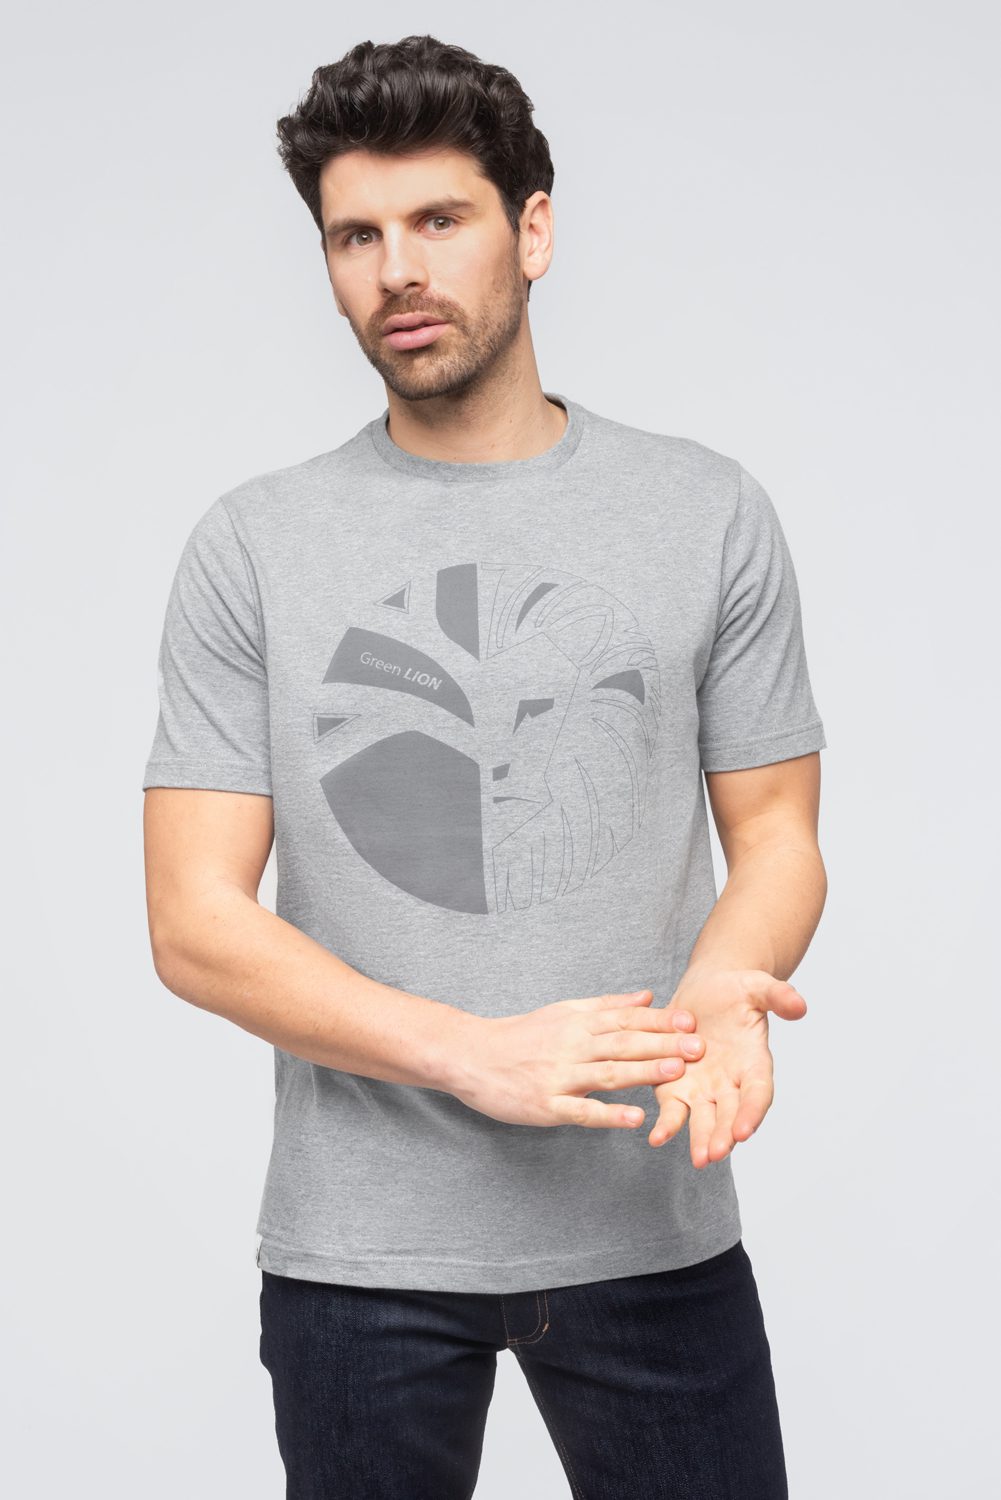 LÉO - T-shirt 100% Coton BIO - GRIS